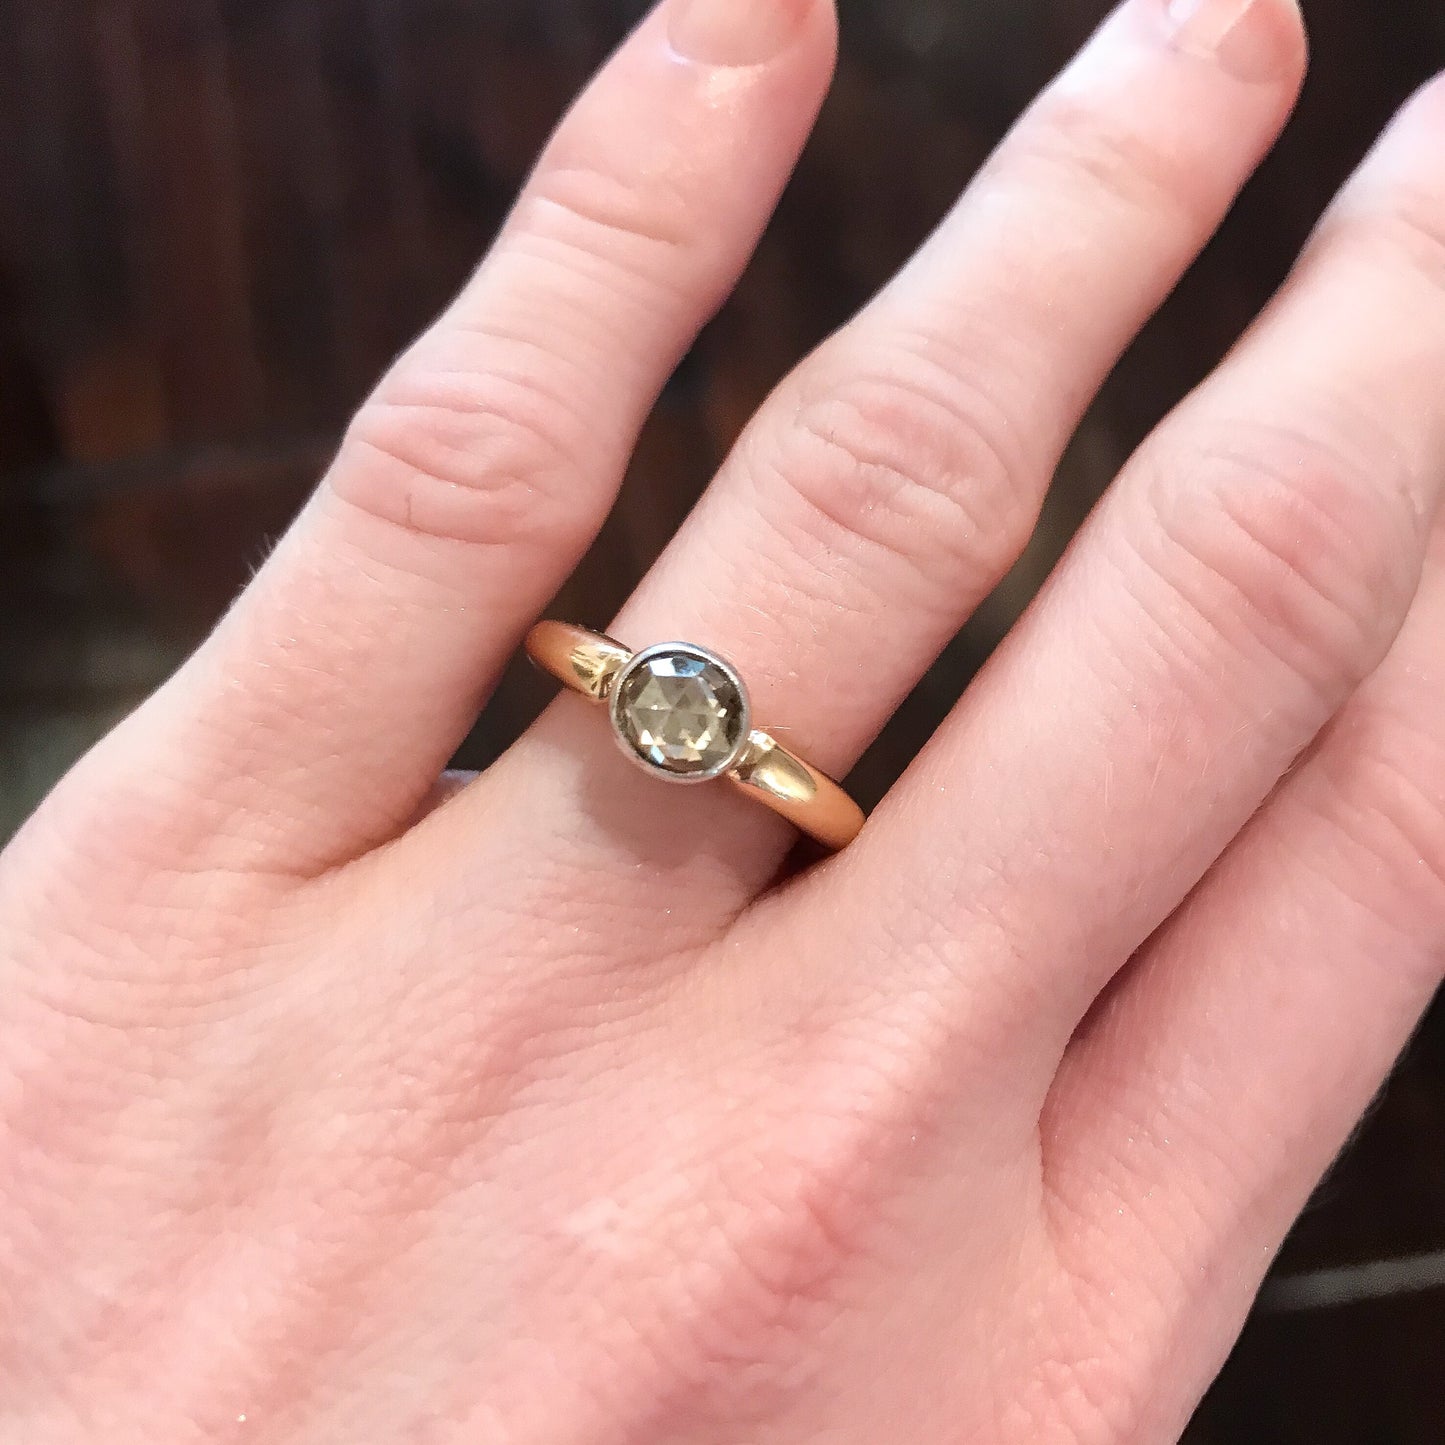 SOLD--Antique Bezel Set Rose Cut Diamond Engagement Ring Silver/14k c. 1900